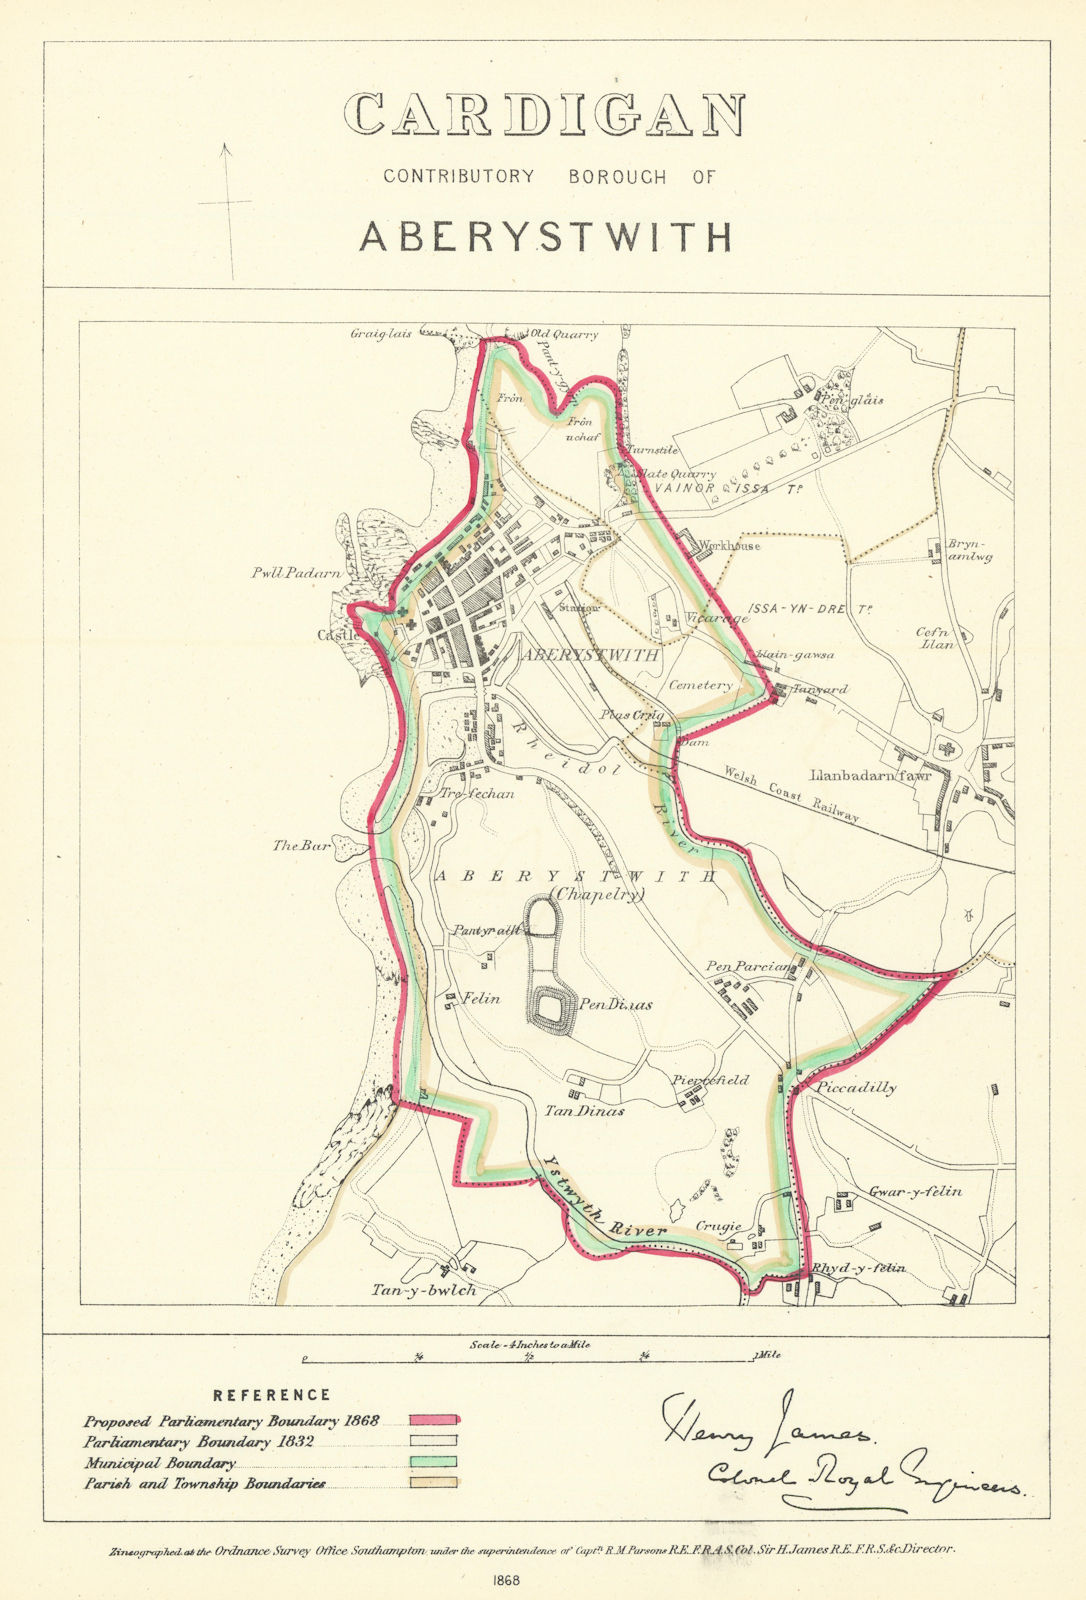 Cardigan Contrib'y Borough of Aberystwyth. JAMES. Boundary Commission 1868 map